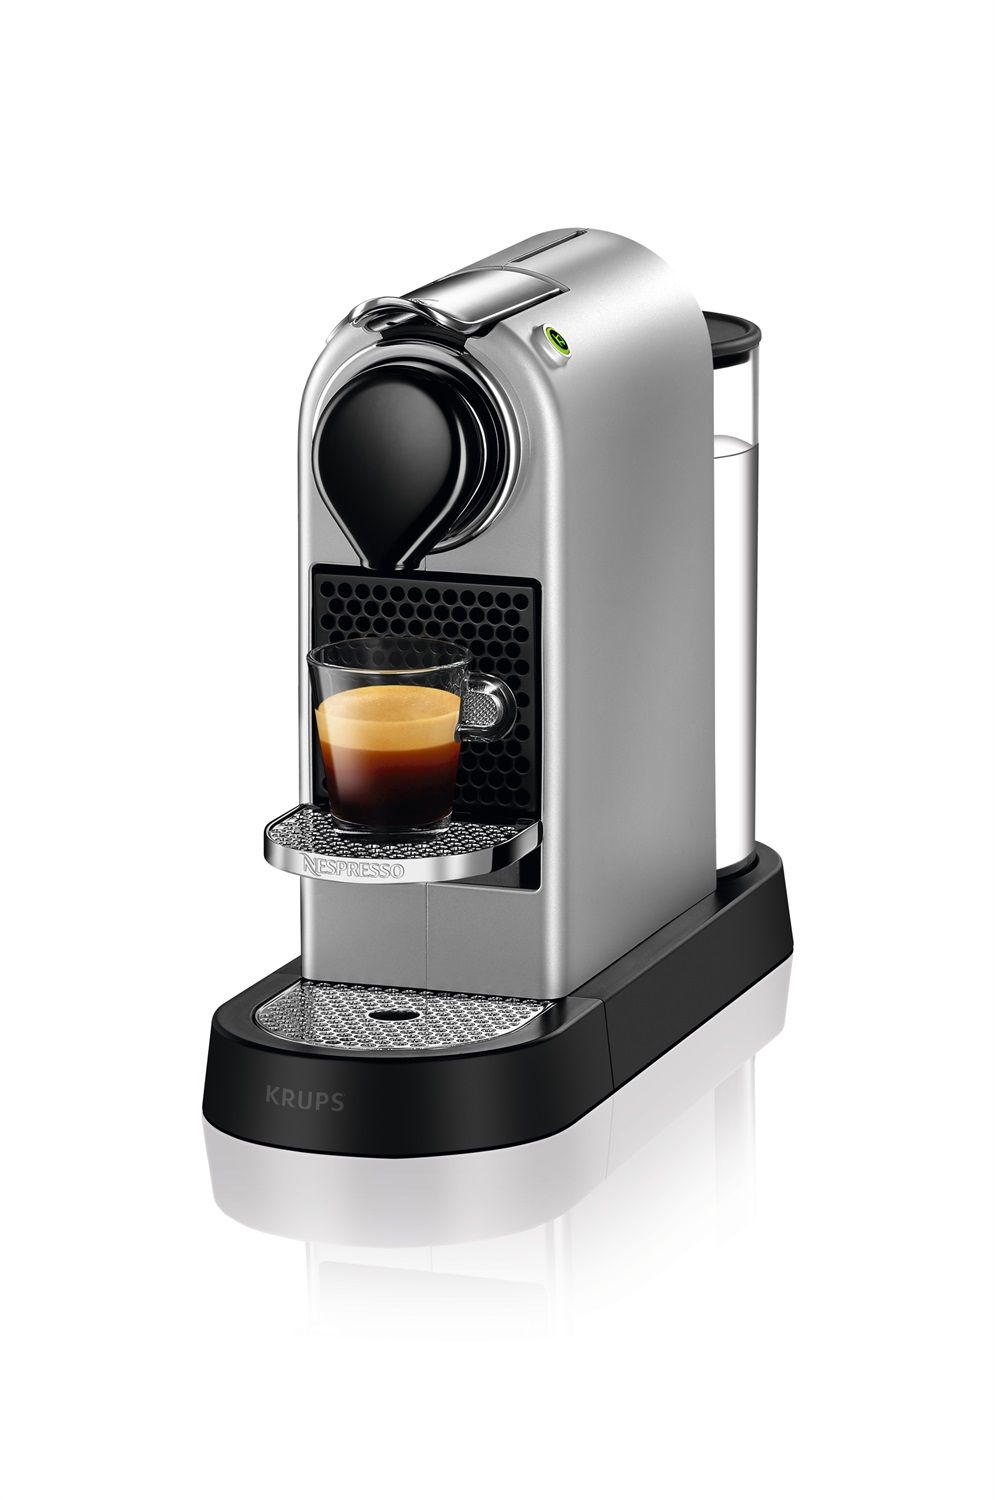 Macchina Caffe Nespresso Krups Capsule ⇒ Confronta Prezzi e Offerte